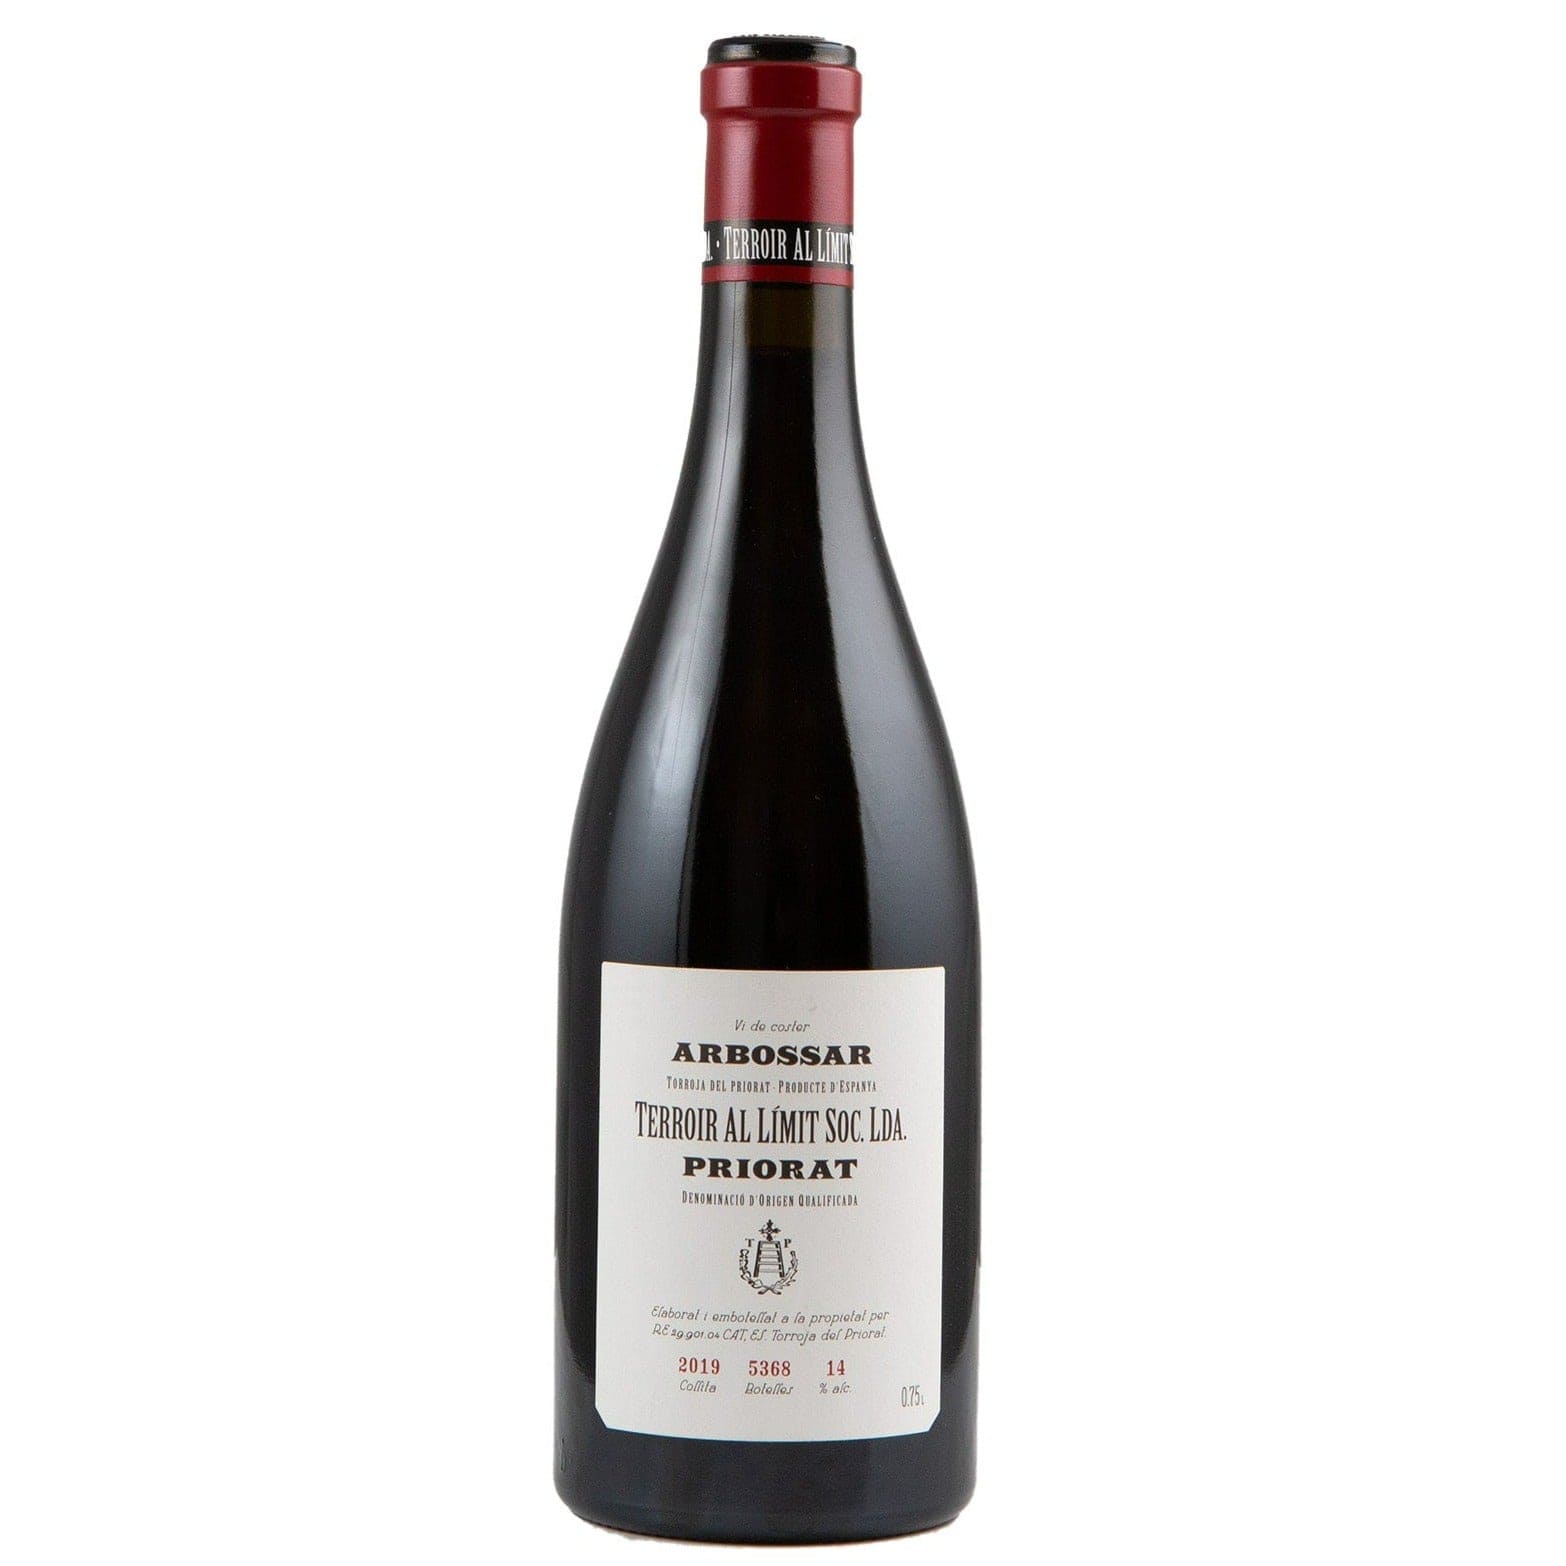 Single bottle of Red wine Terroir Al Limit, Priorat Arbossar, Priorat, 2019 Carignan, Grenache and Syrah blend